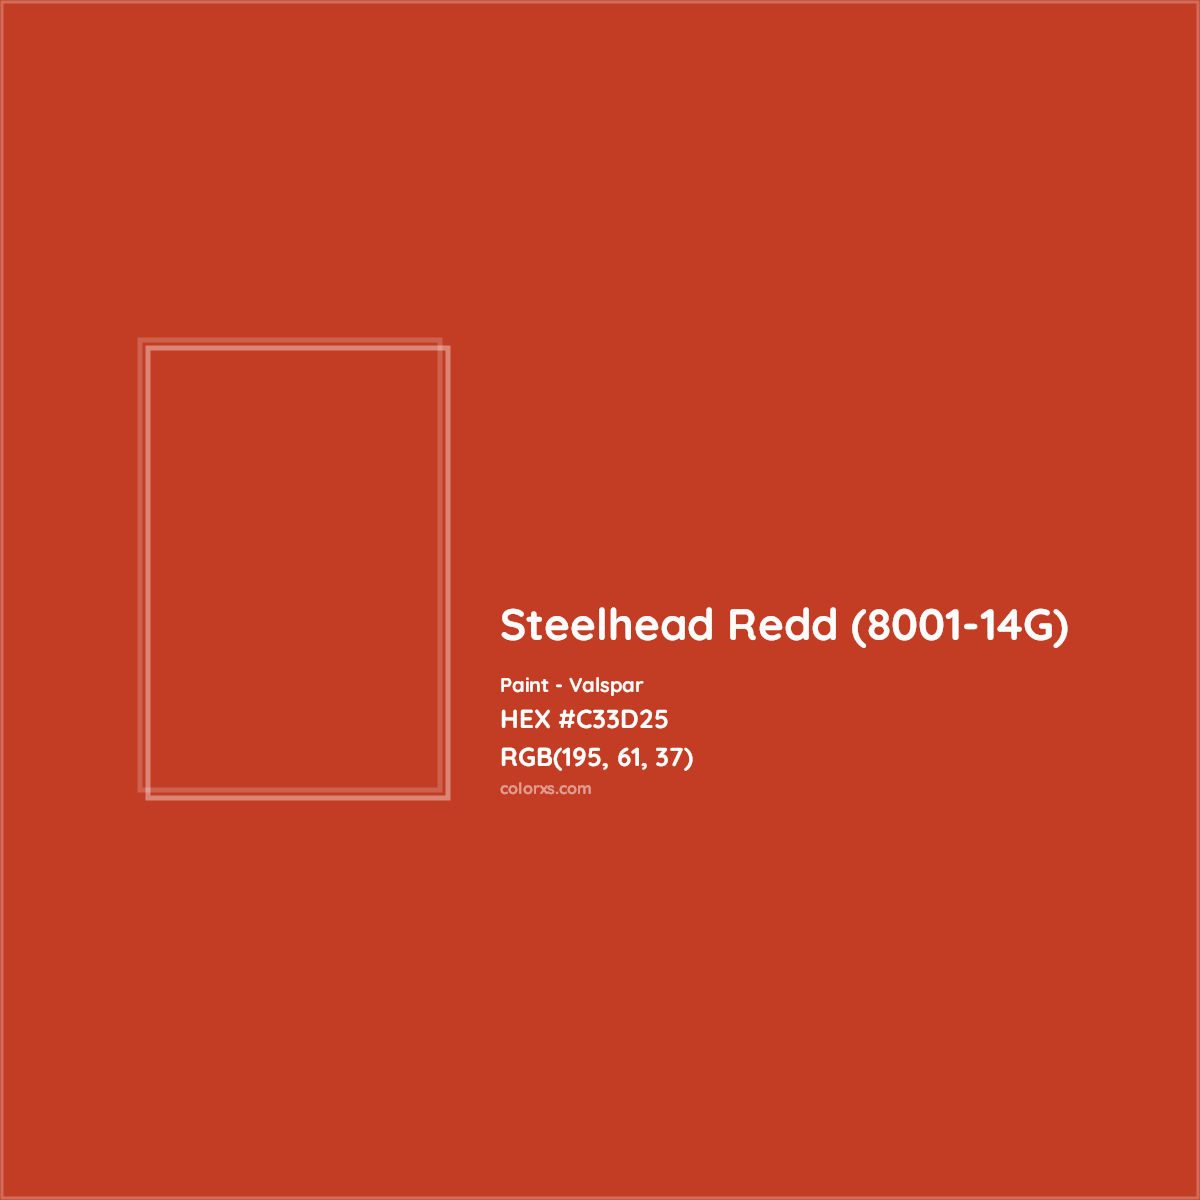 HEX #C33D25 Steelhead Redd (8001-14G) Paint Valspar - Color Code